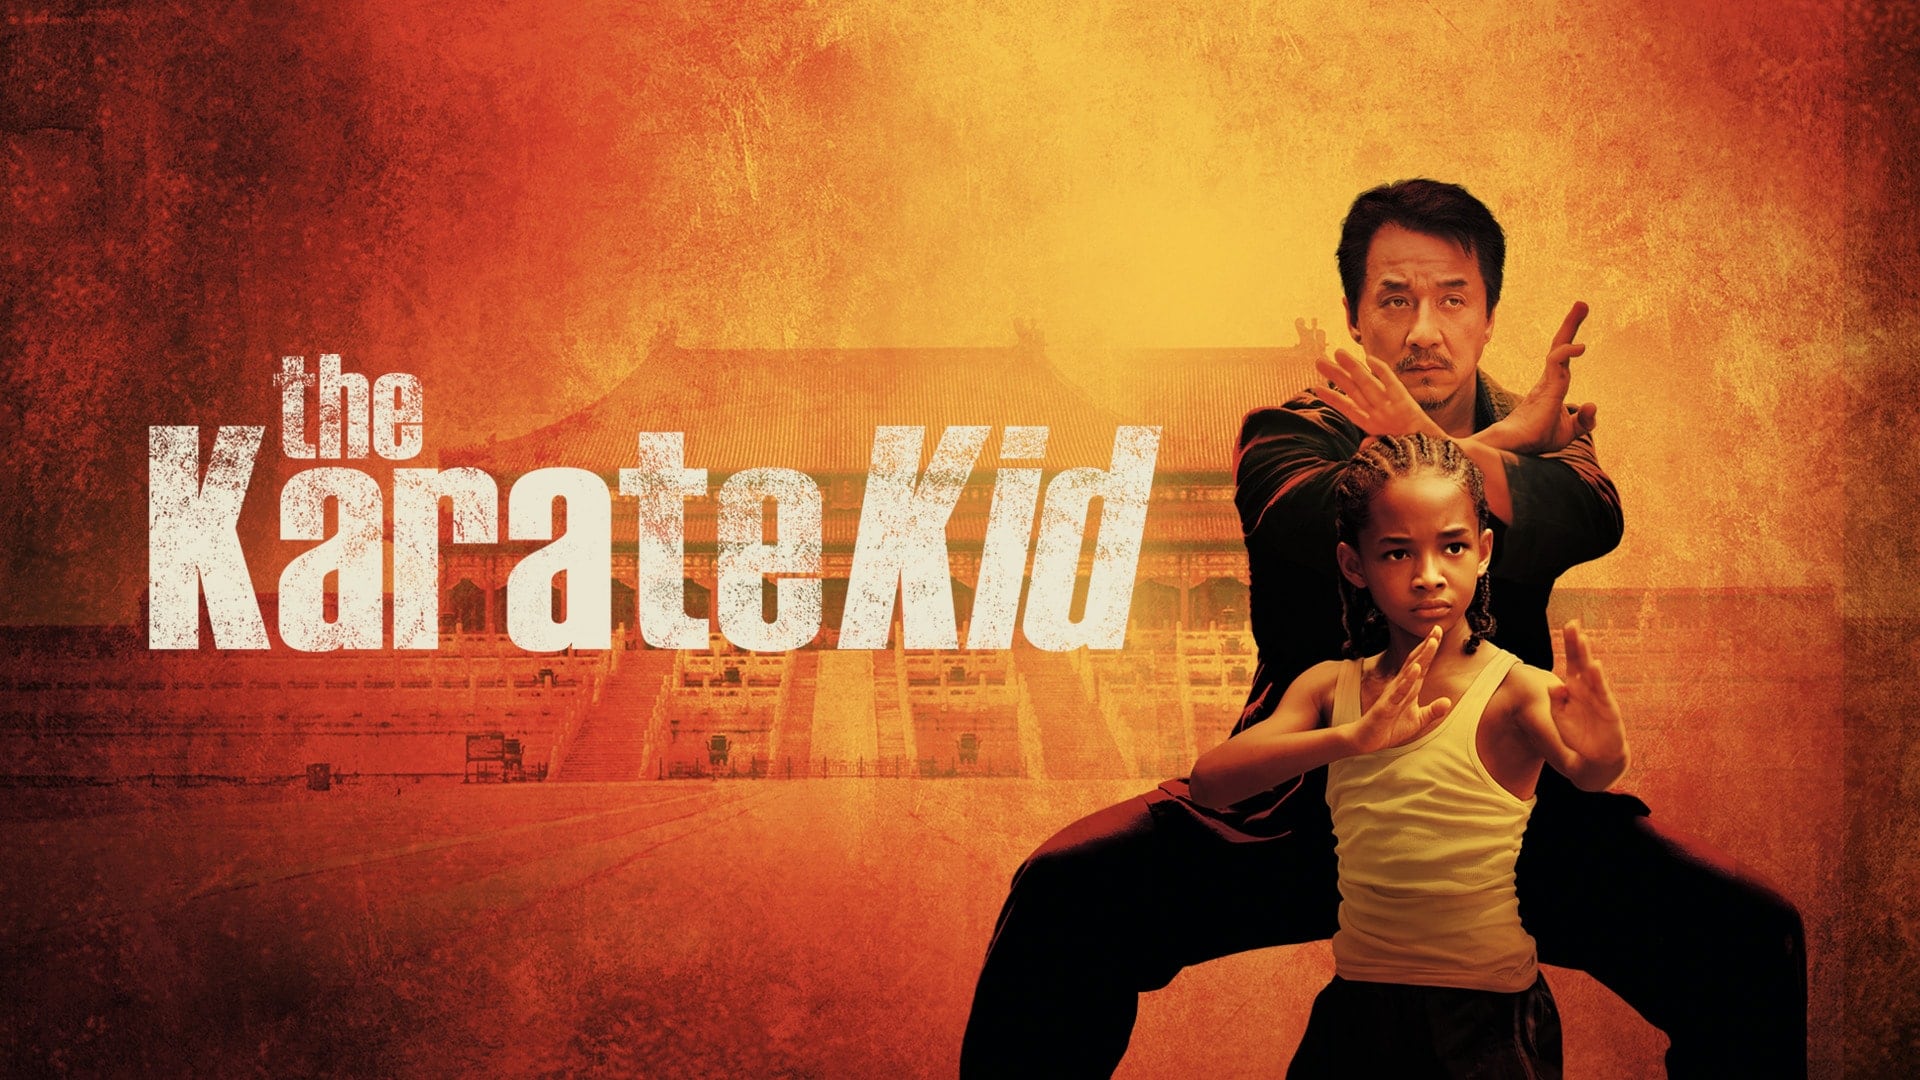 Watch The Karate Kid (2010) Online | Stream Full Movies